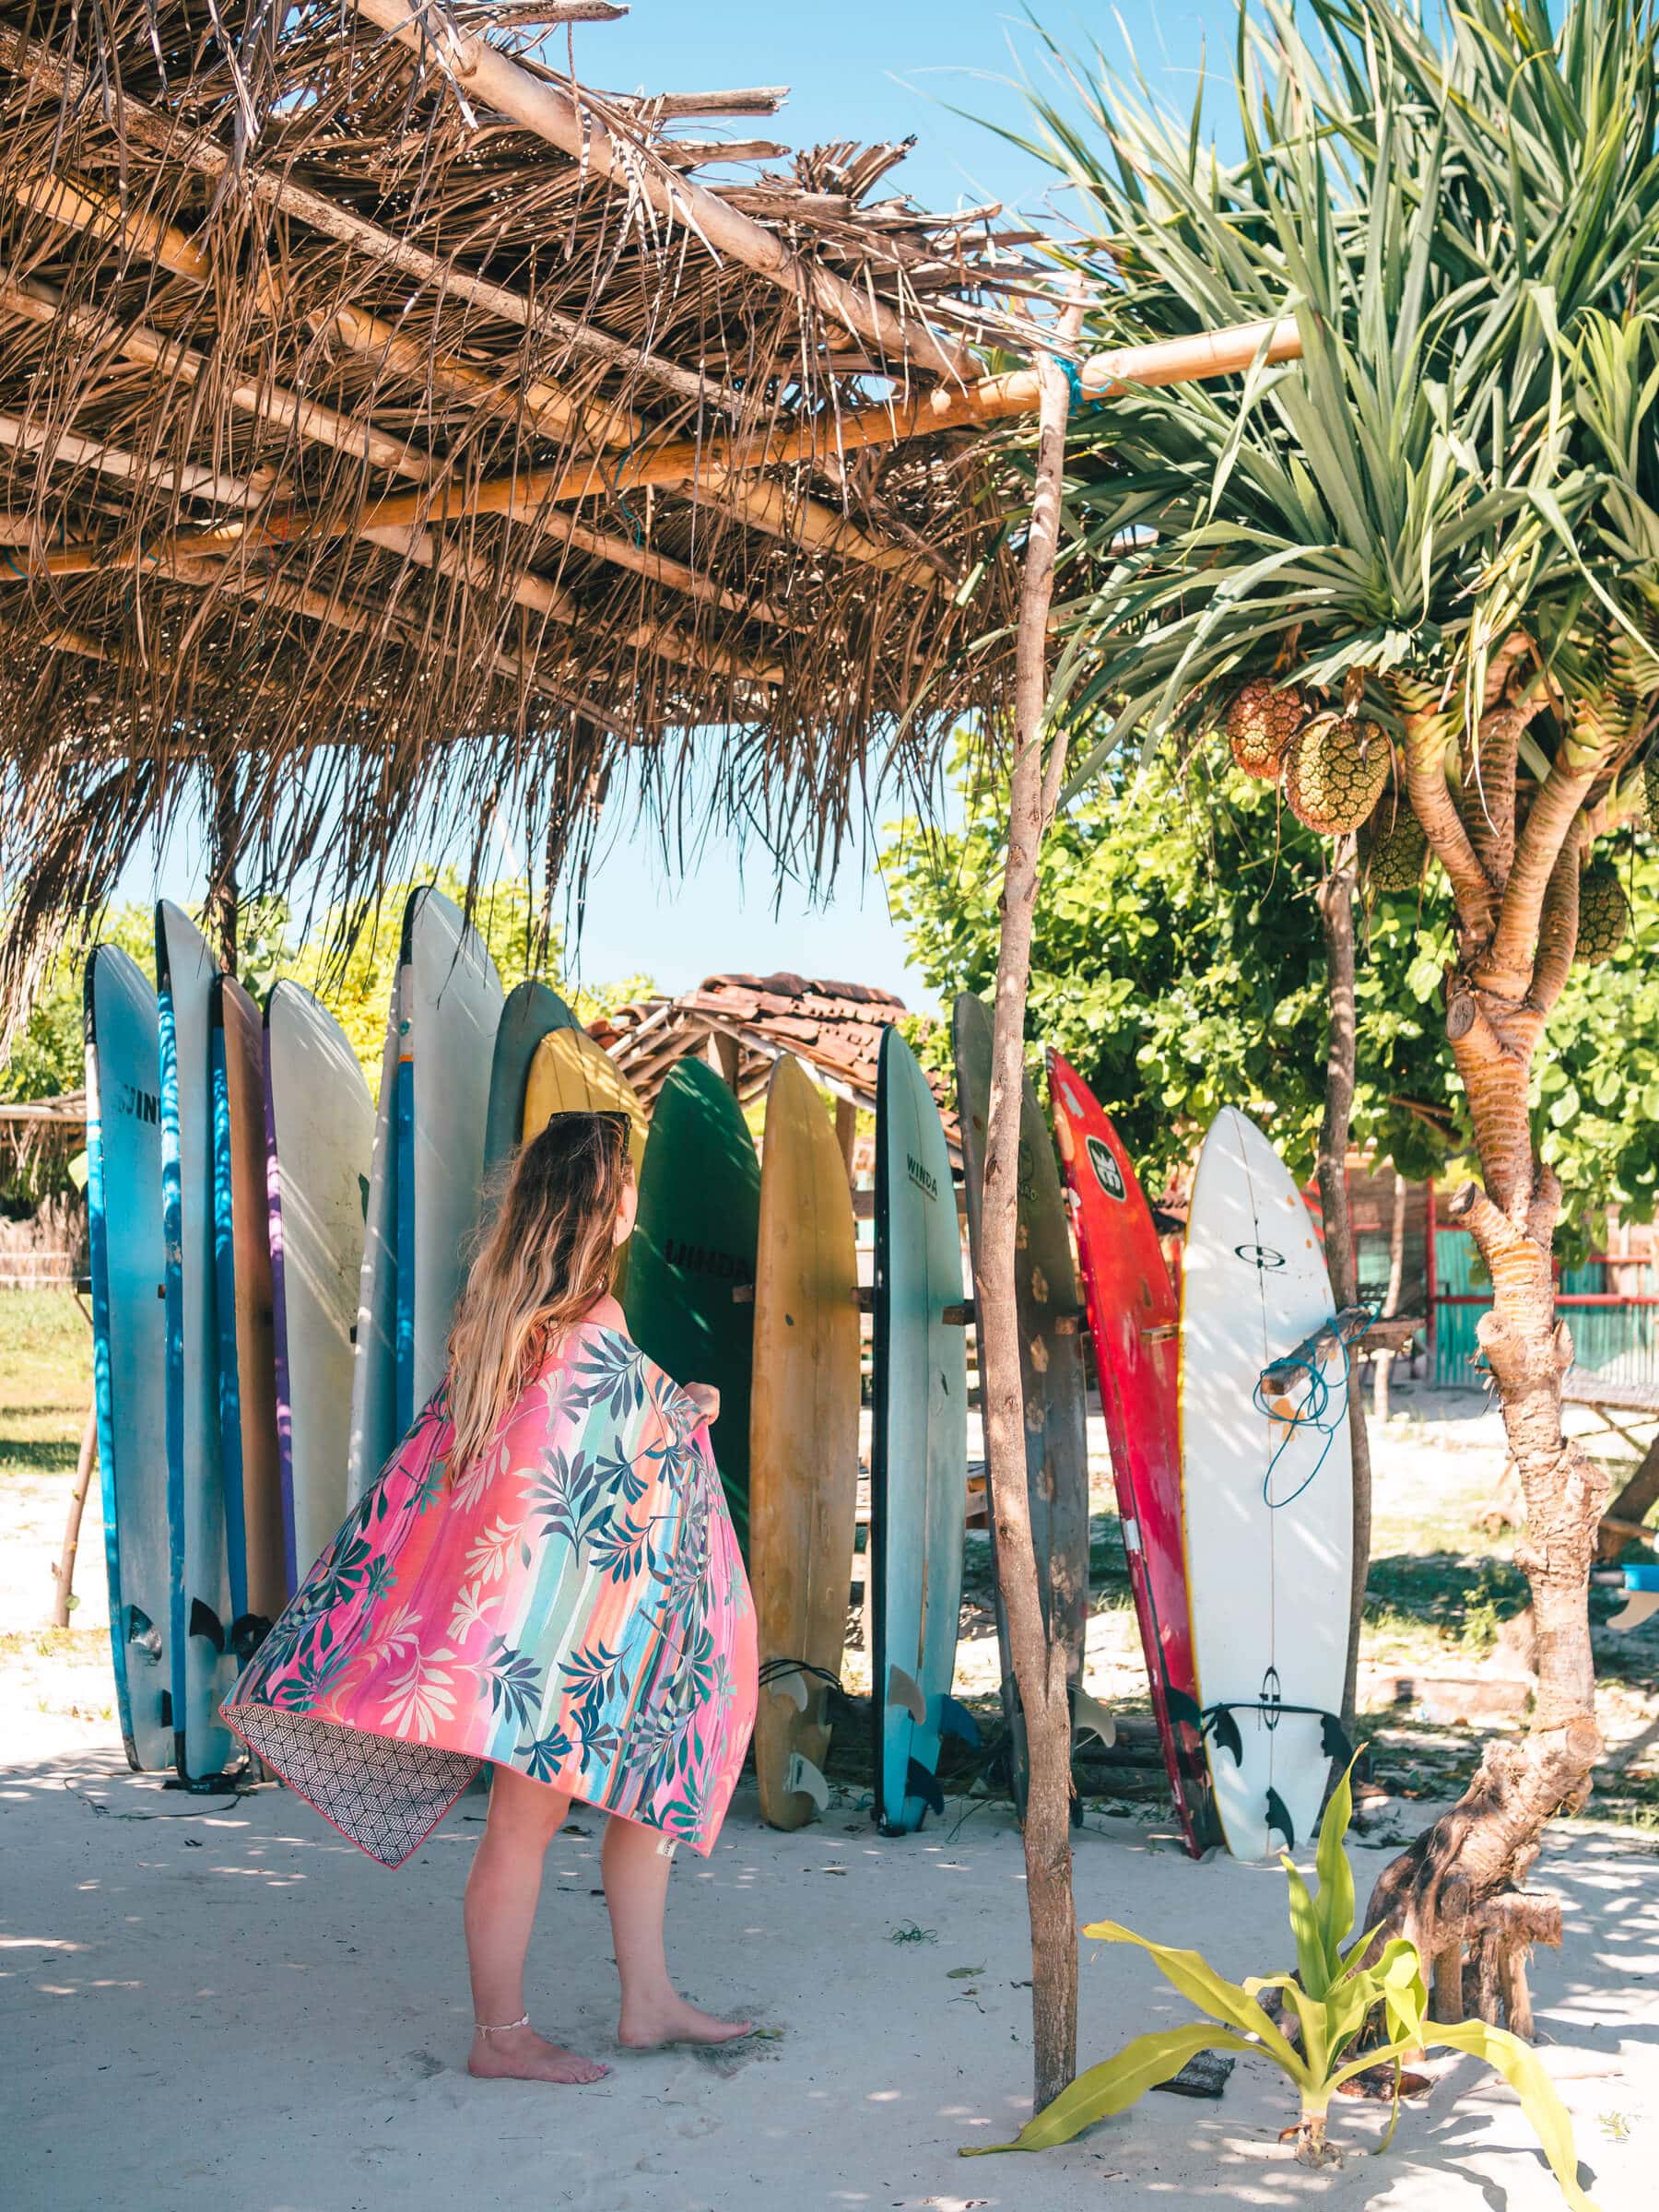 Follow along on our journey living in Kuta, Lombok for two months - Surfboards on Tanjung Aan Beach #lombok #kuta #indonesia #travelinspo #bucketlist